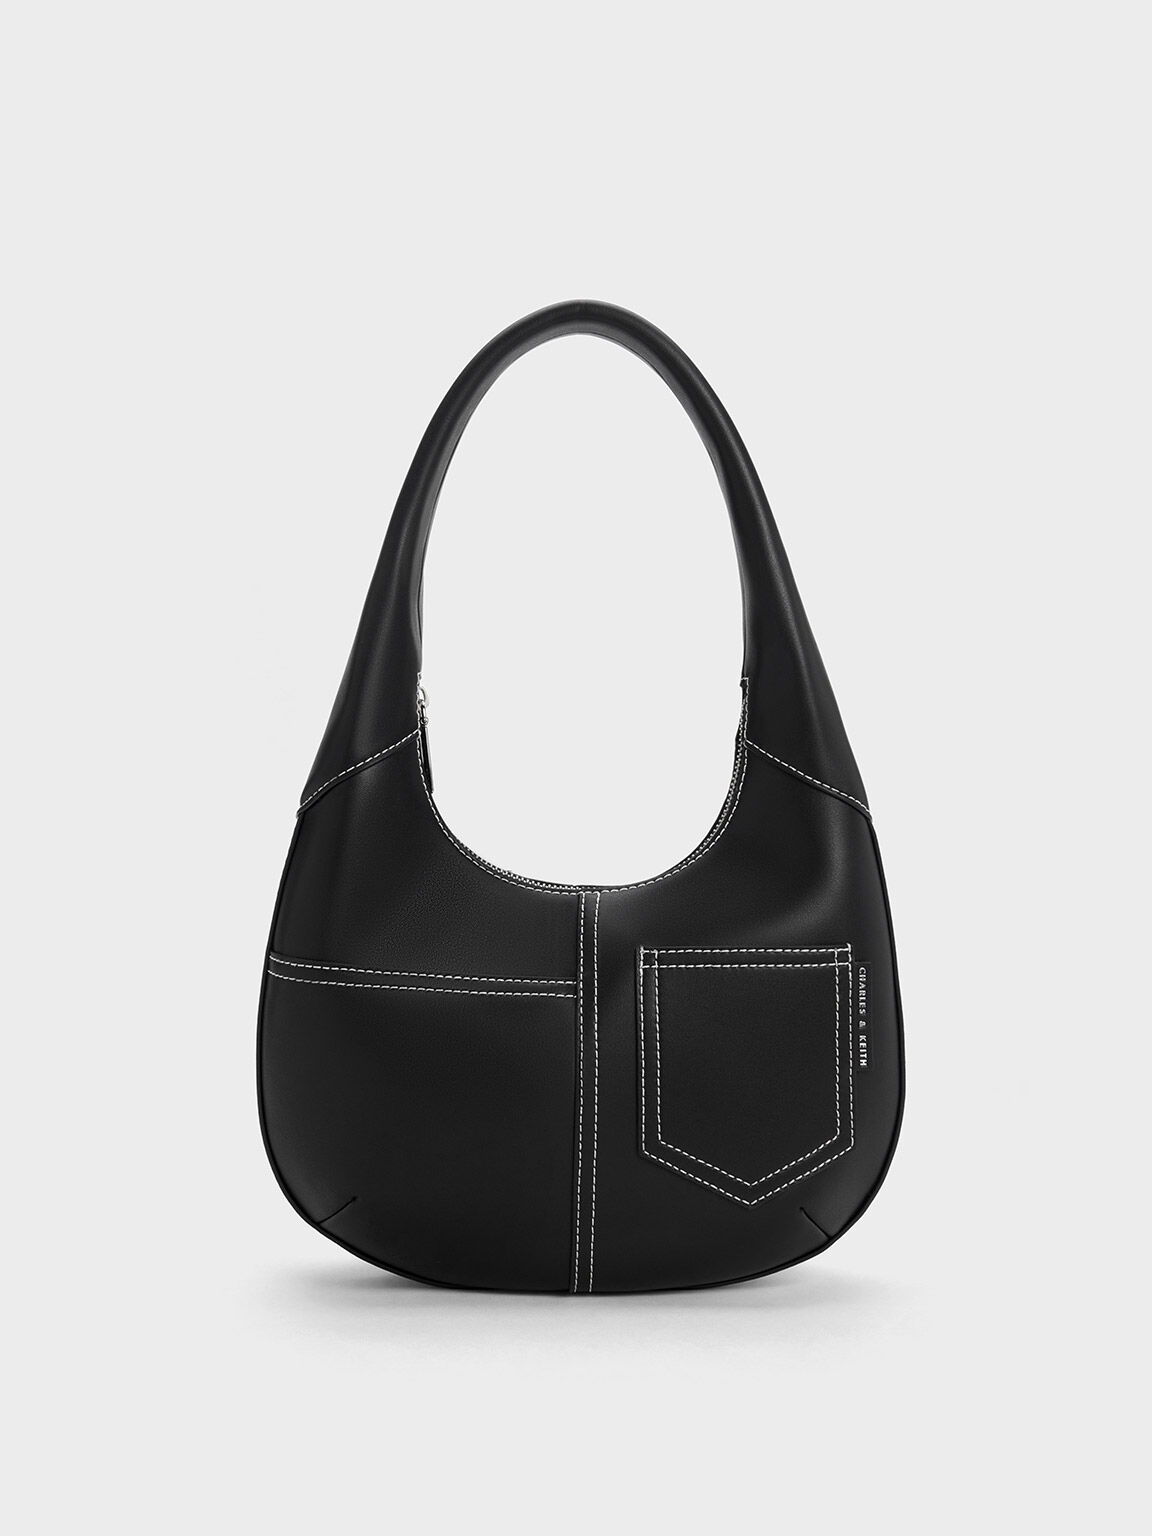 New Fashion Bag Female Korean Version Simple Handbag Trendy Shoulder Bag  Diagonal Bag Female Clutch